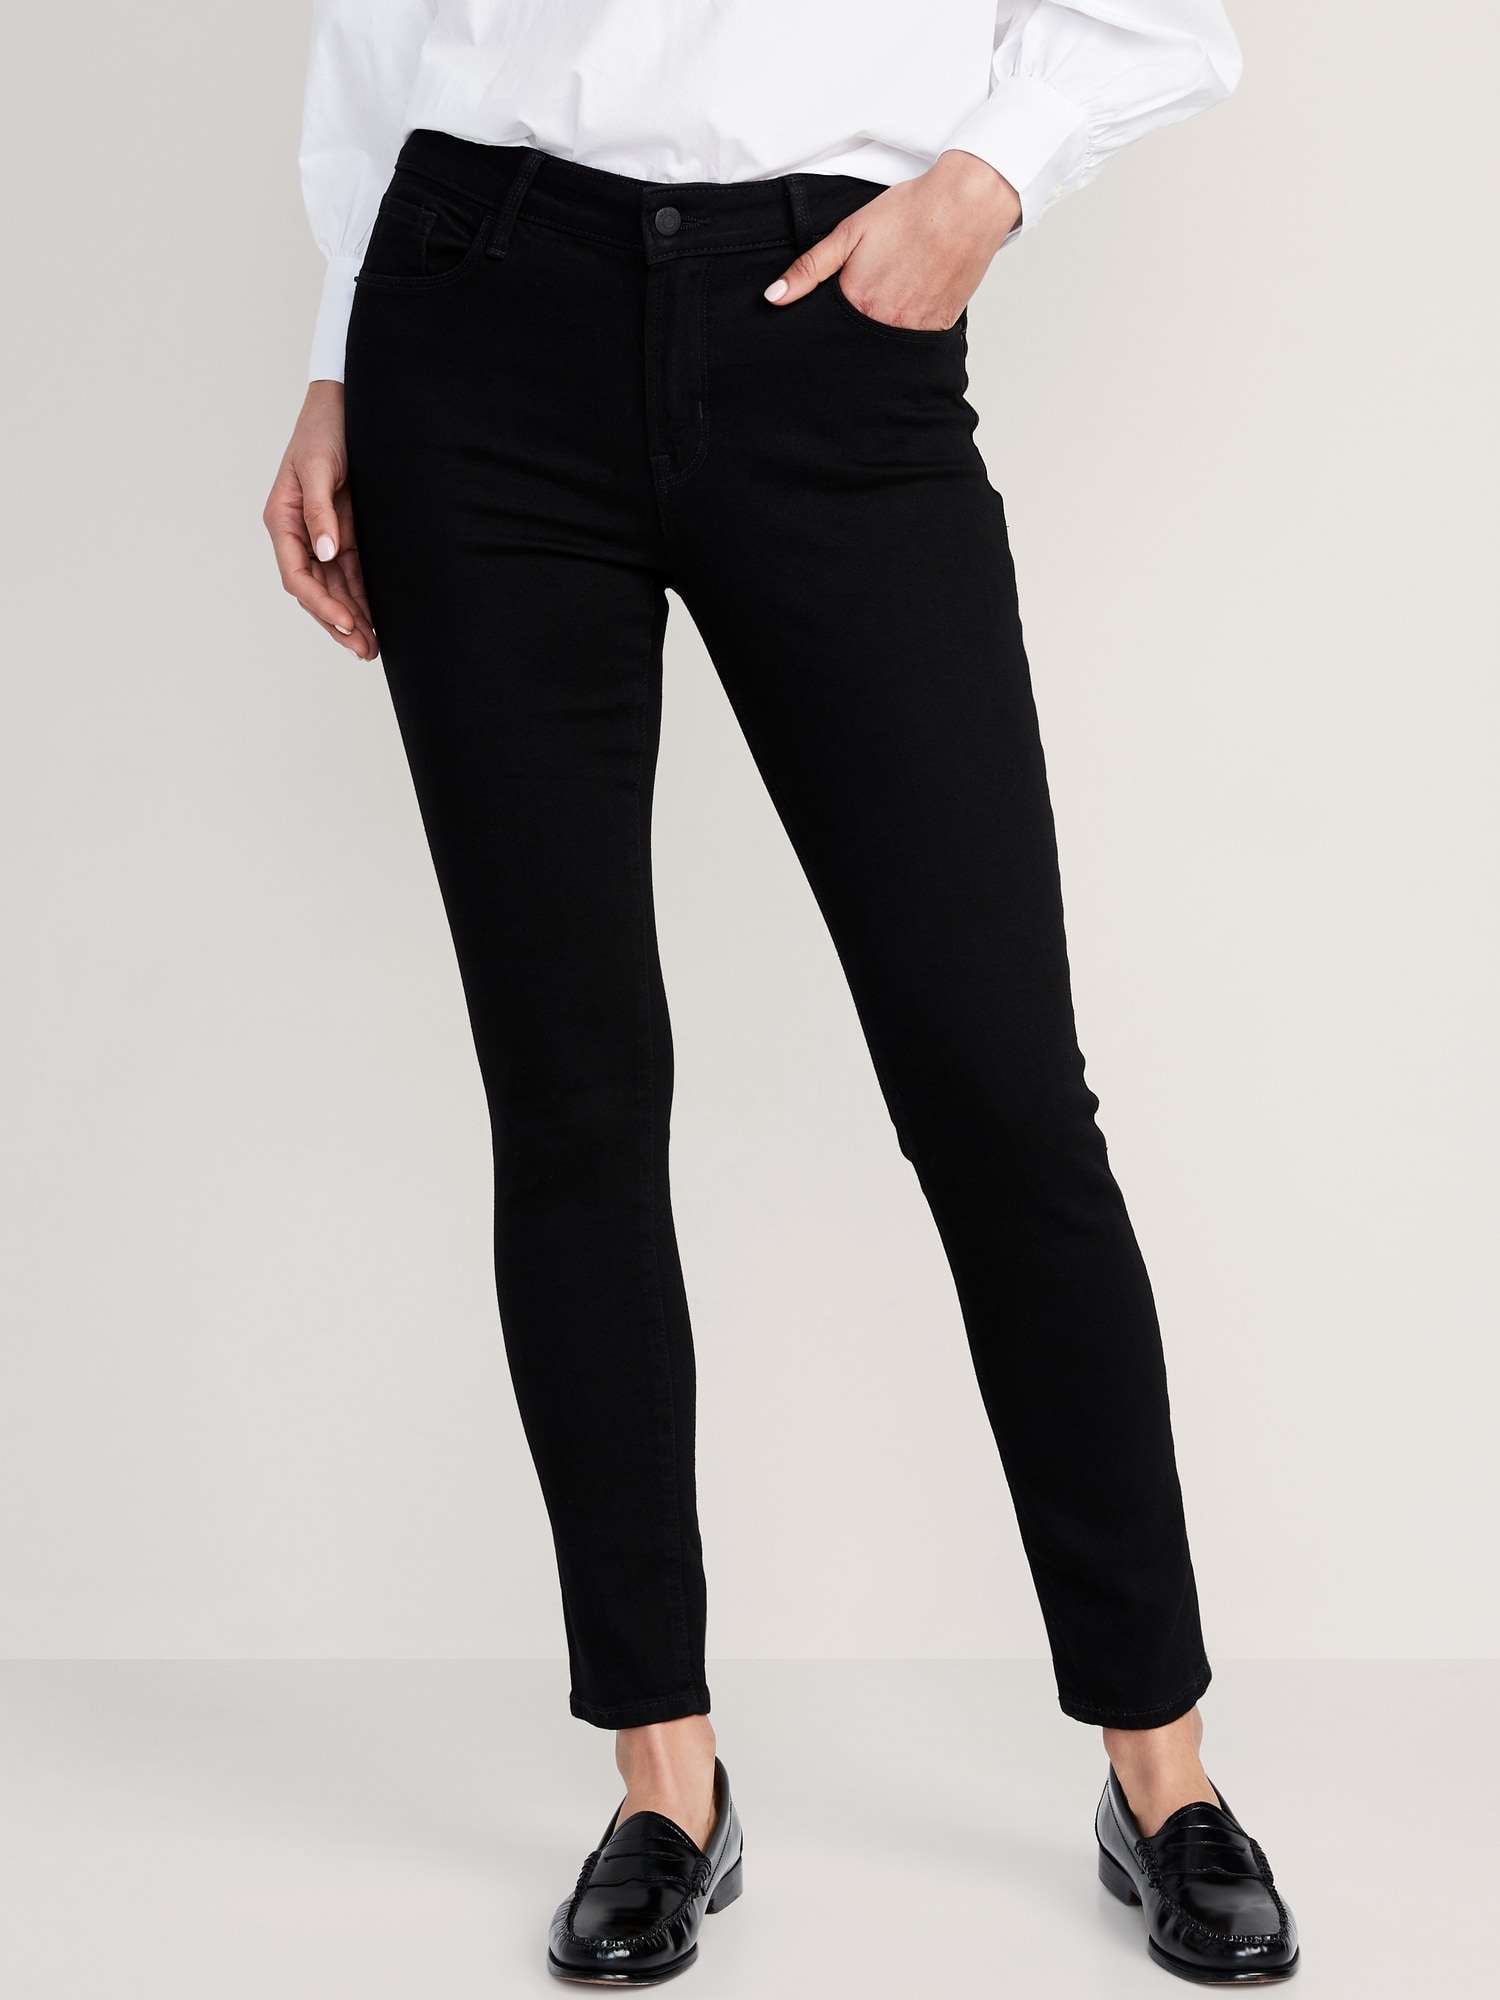 Shascullfites Jeans Women High Rise Slim Fit Stretch Skinny Black Denim  Jeggings | eBay